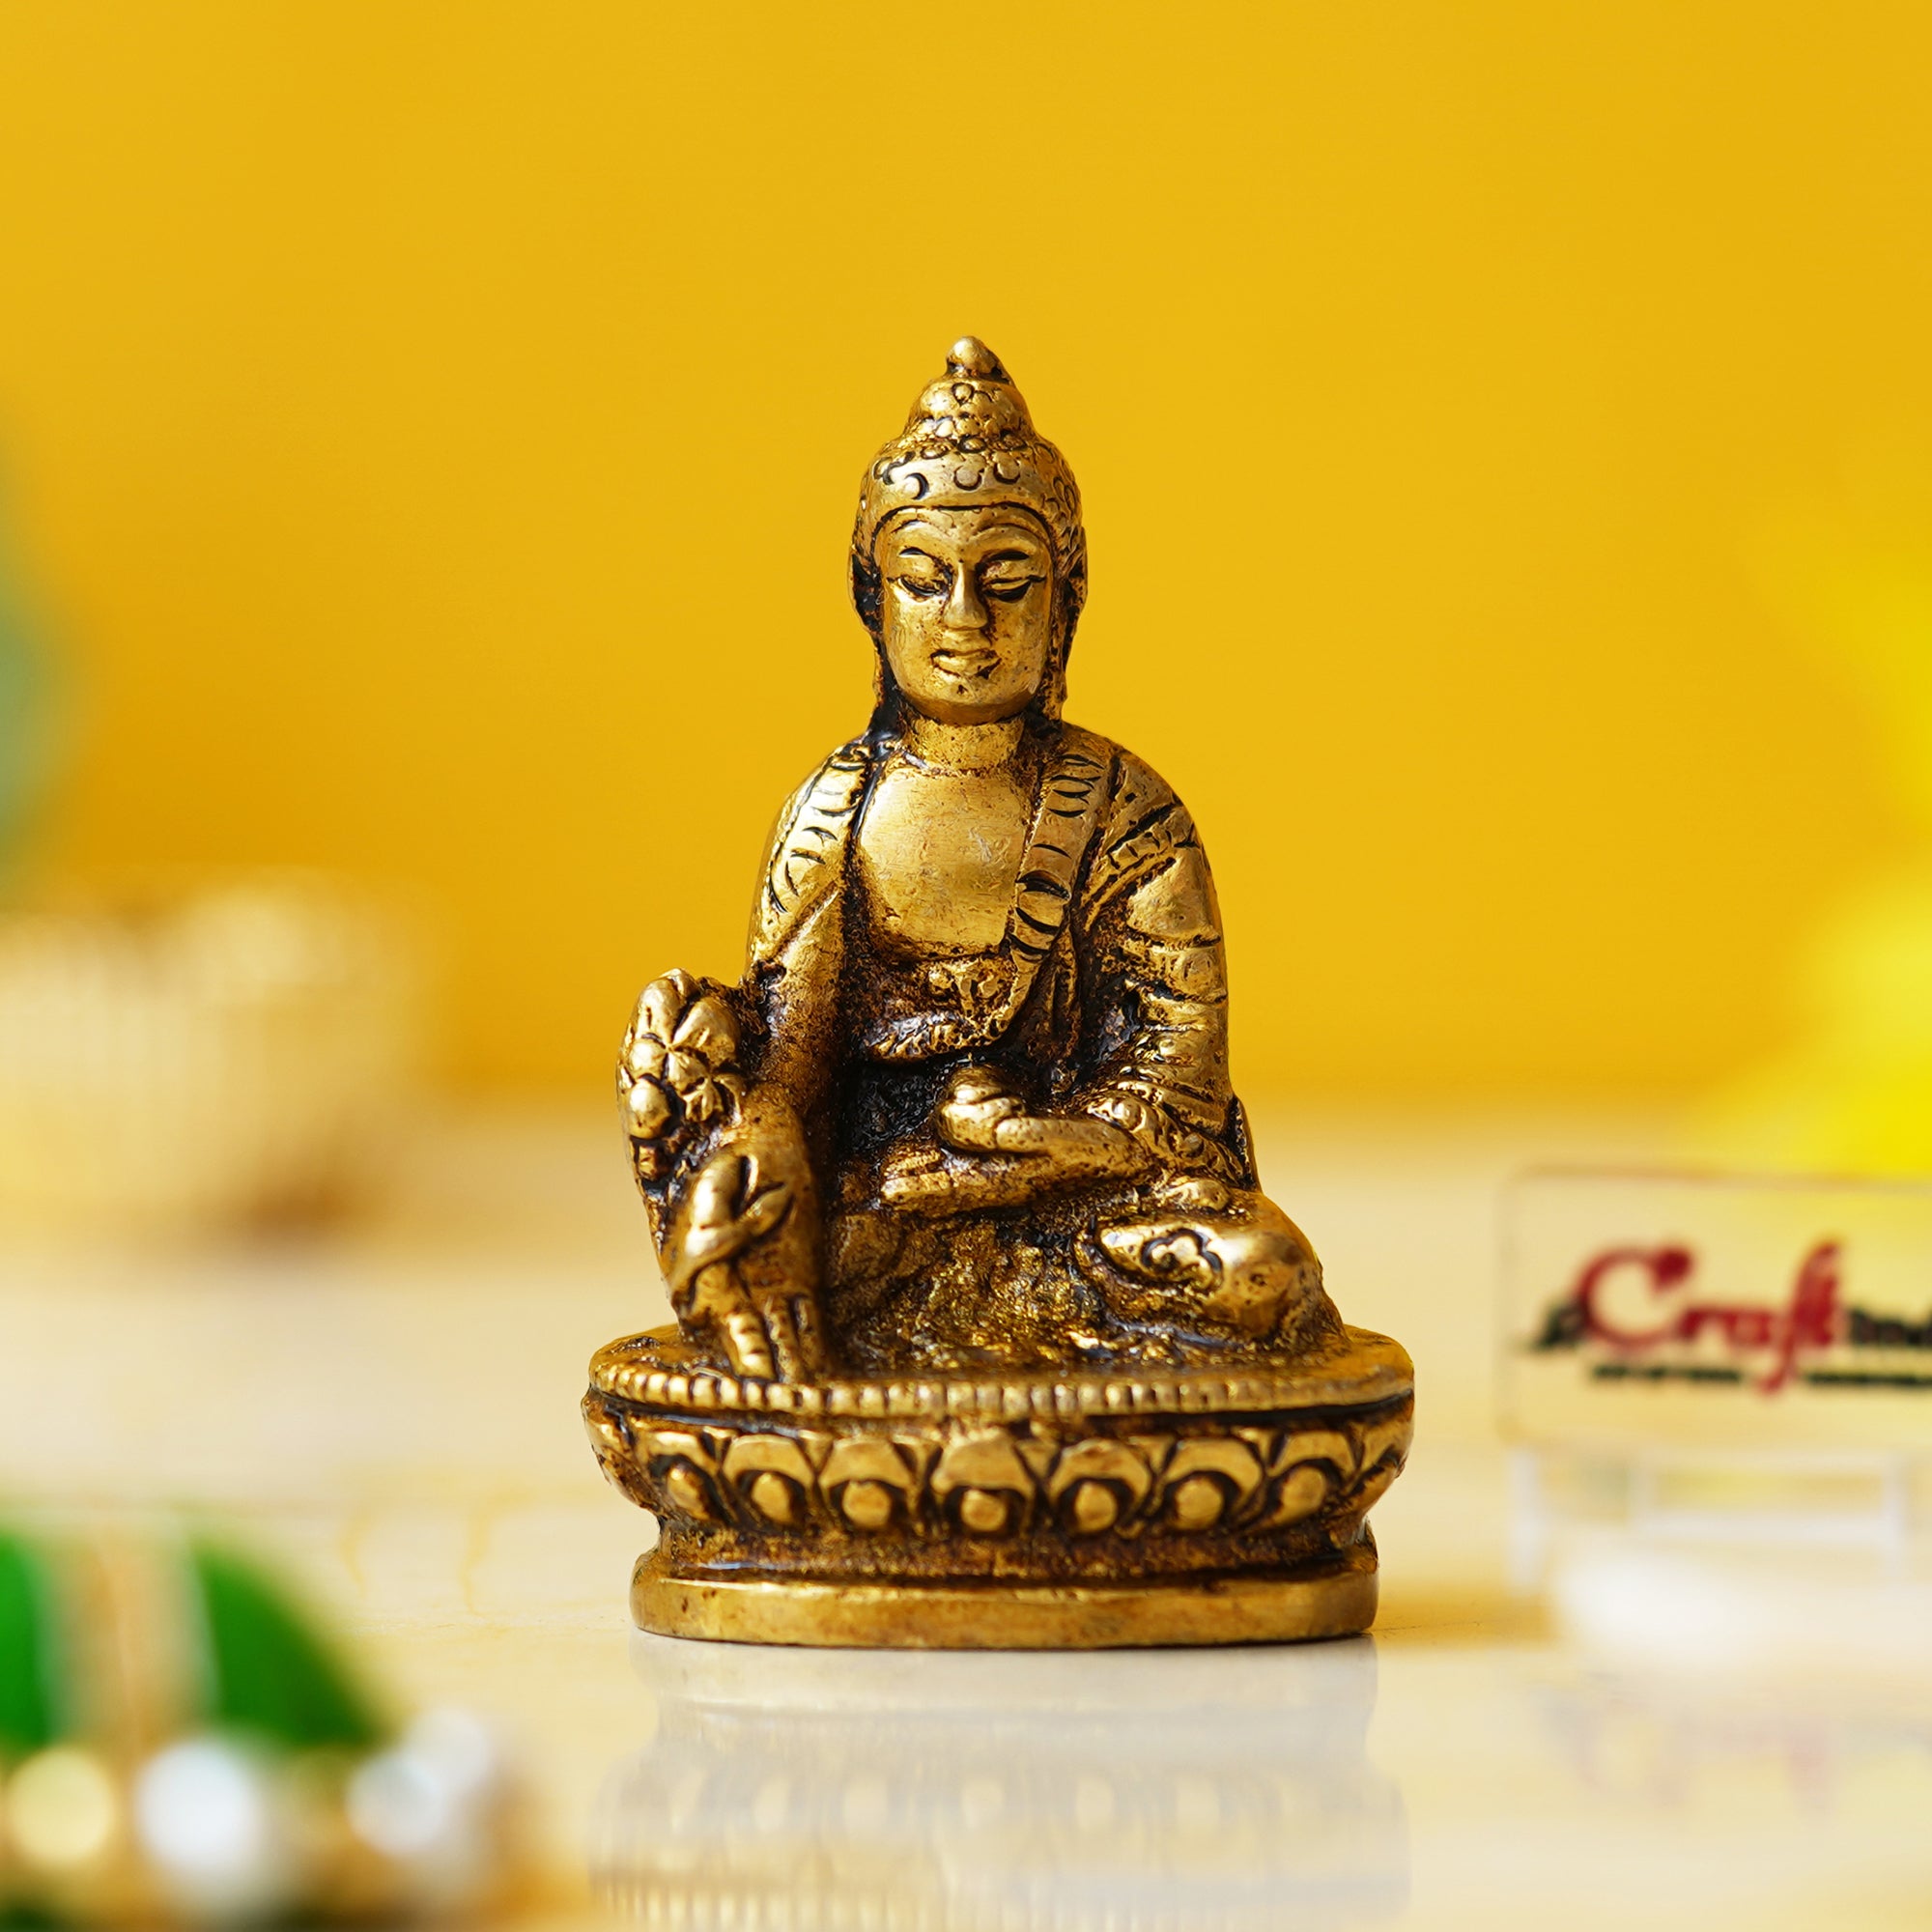 Golden Brass Lord Buddha Statue Murti Idol for Home Decor, Living Room, Office Desk, Car Dashboard - Buddha Purnima Gift to Bring Good Luck